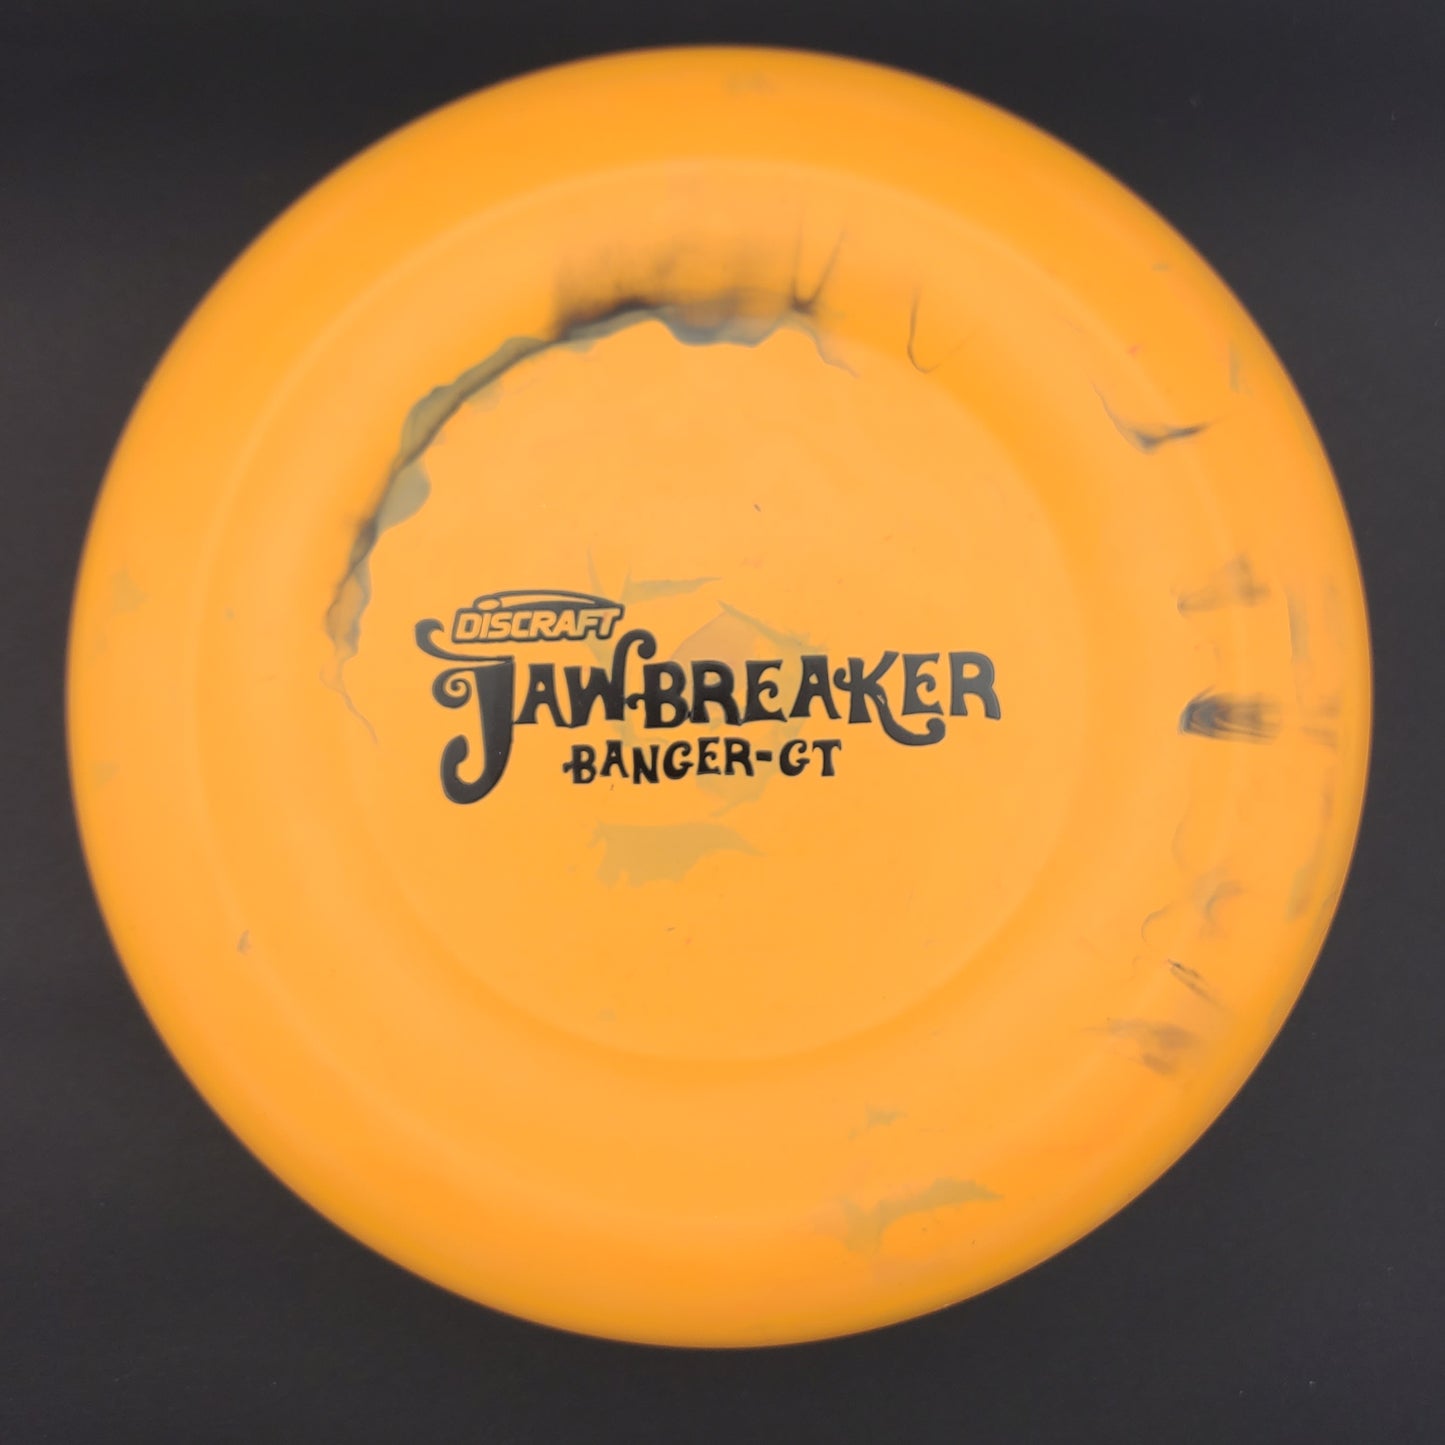 Discraft - Banger-Gt - Jawbreaker